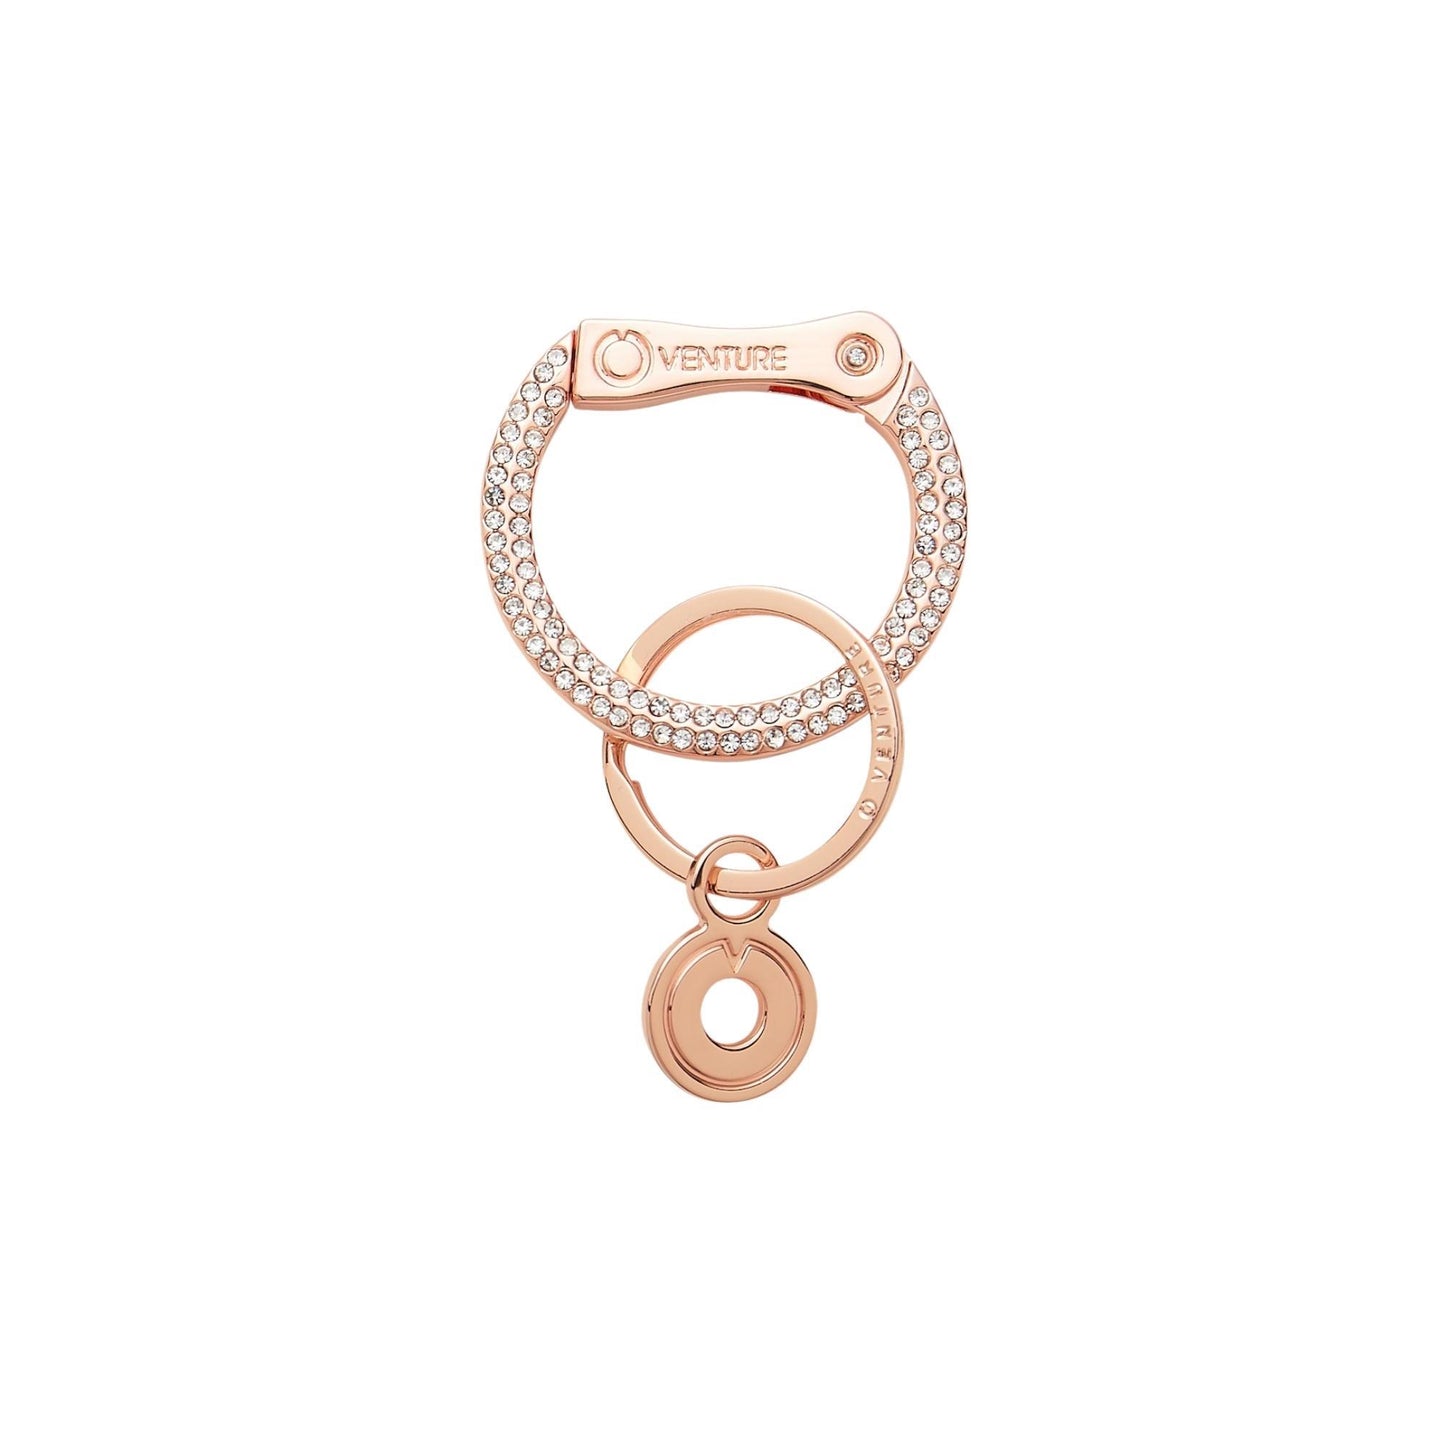 Rose Gold Jeweled Locking Clasp- Oventure